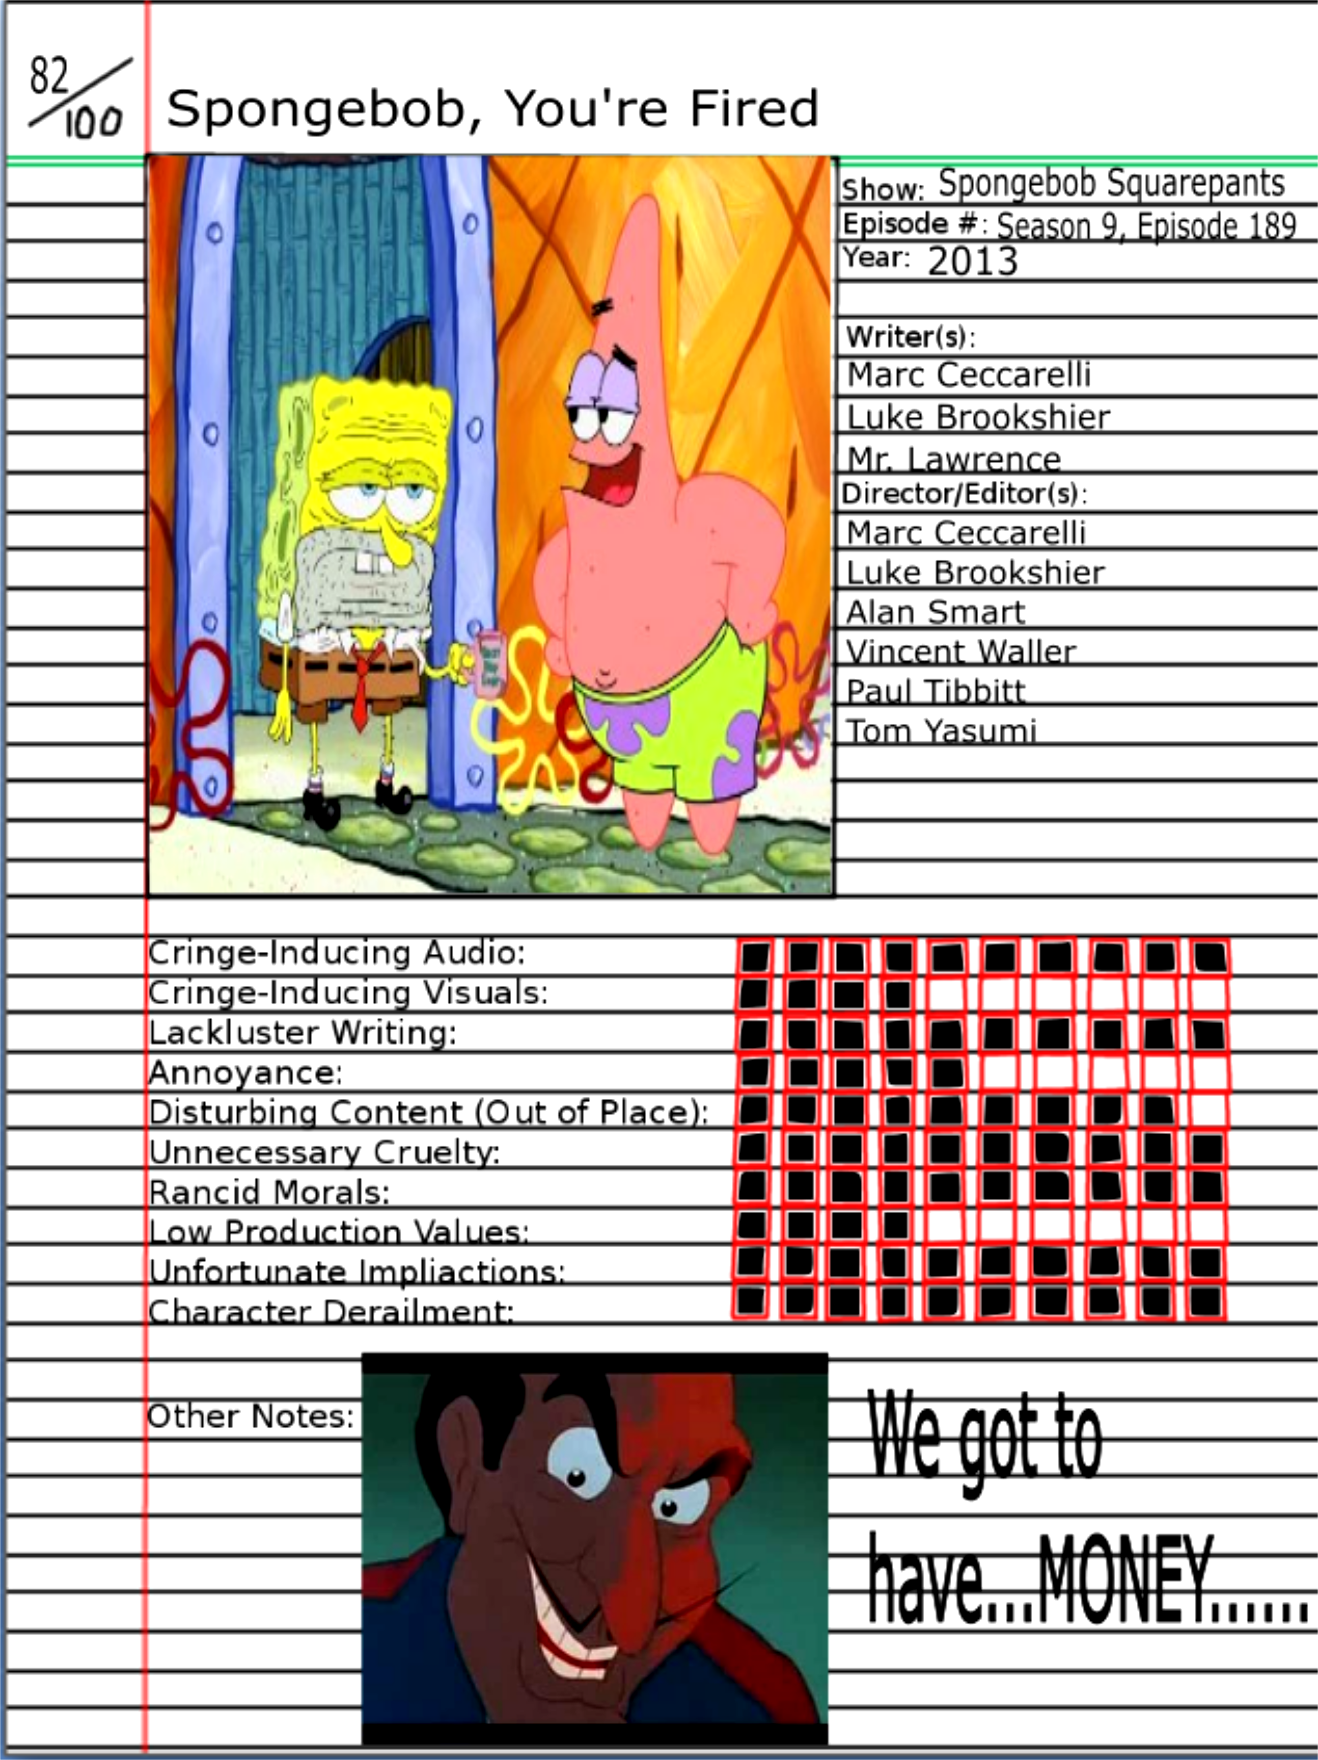 Animated Atrocity Spongebob Youre Fired By JayZeeTee16 On DeviantArt